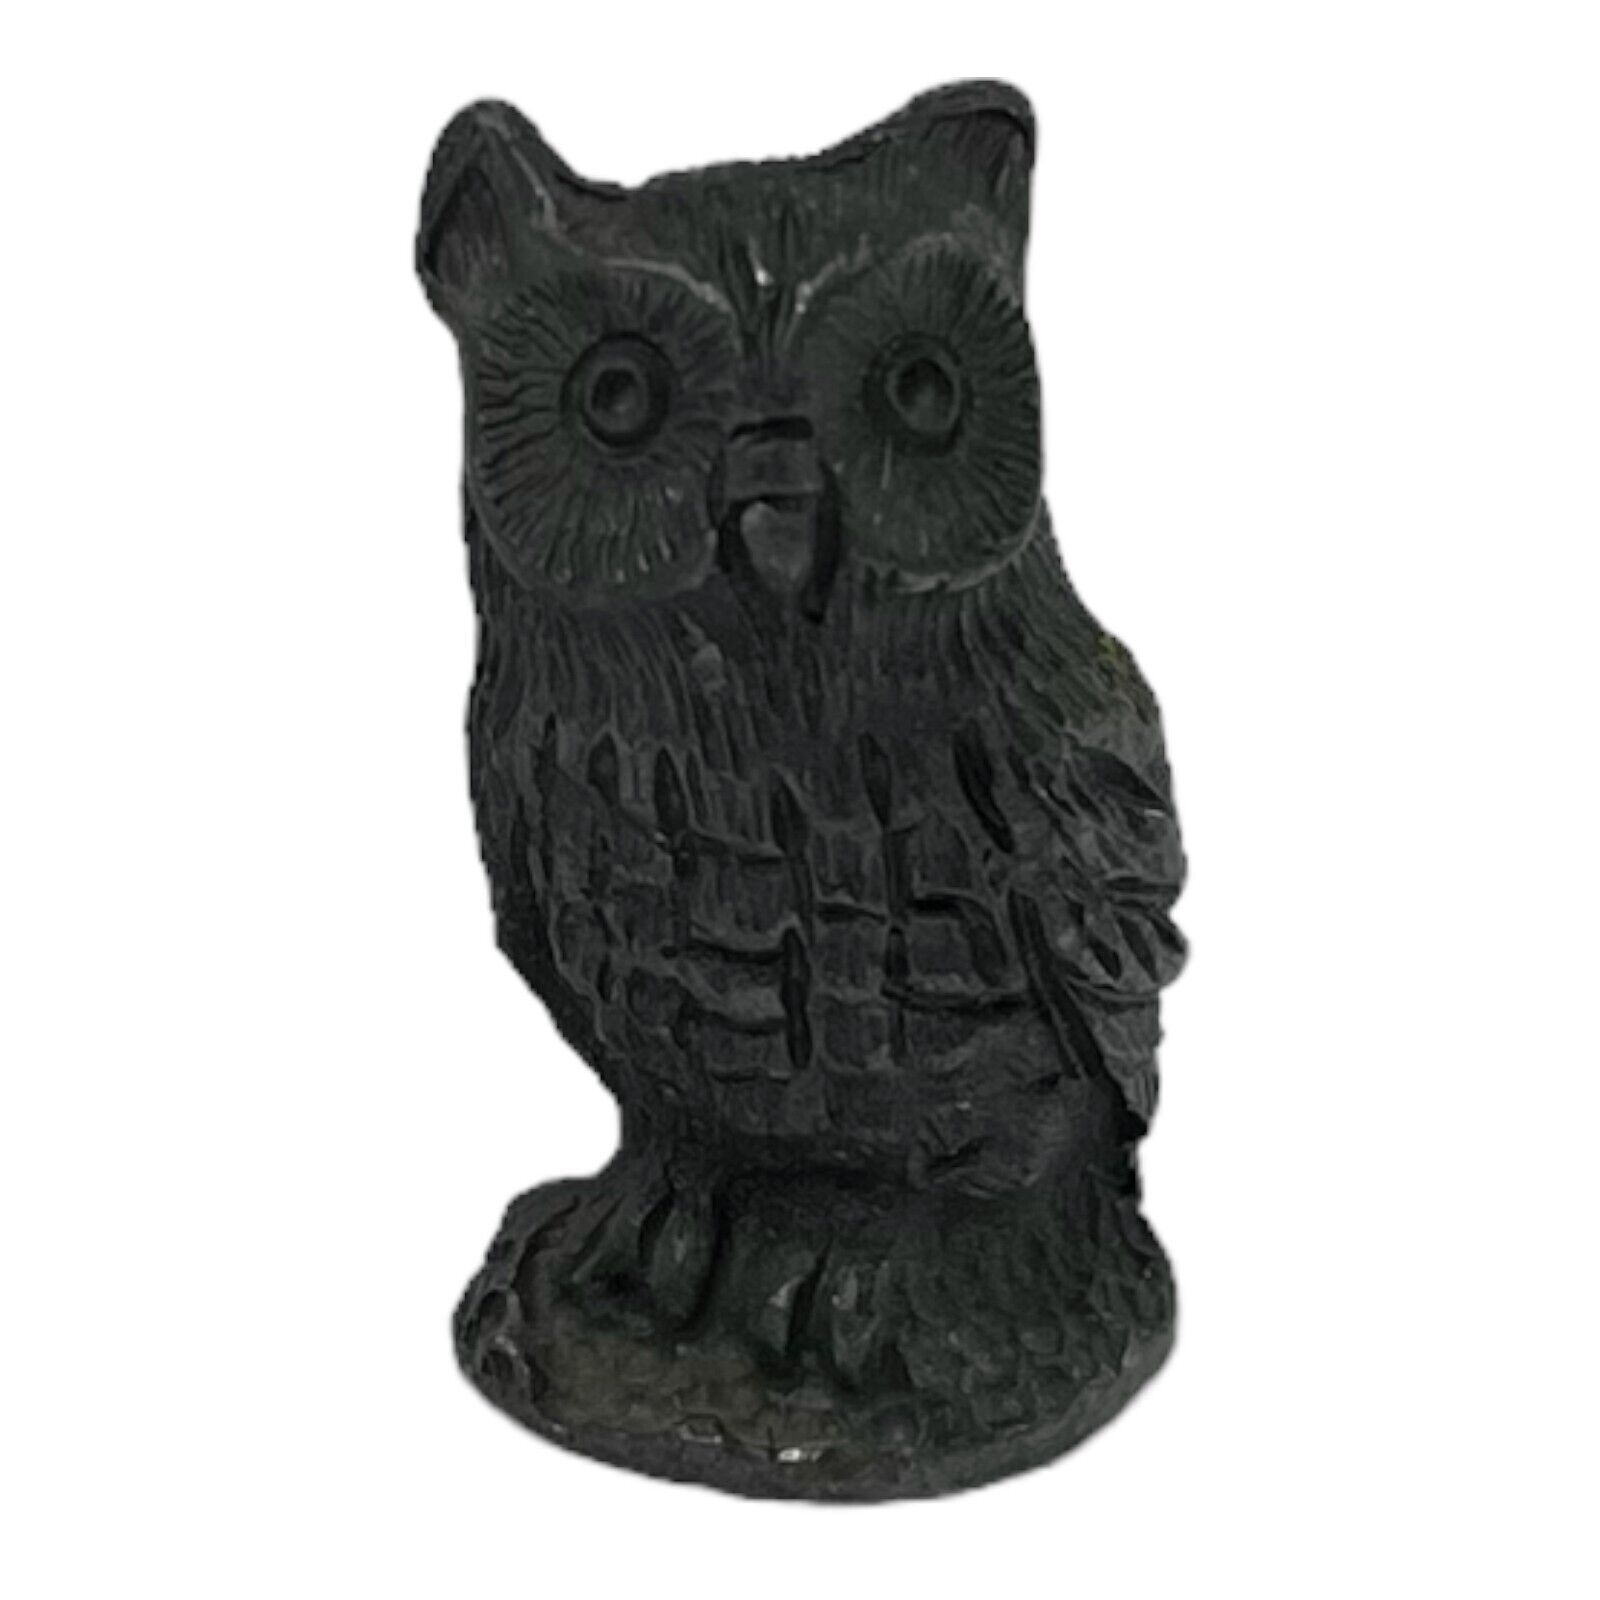 Owl 1.5 Inch Vintage Pewter Figurine